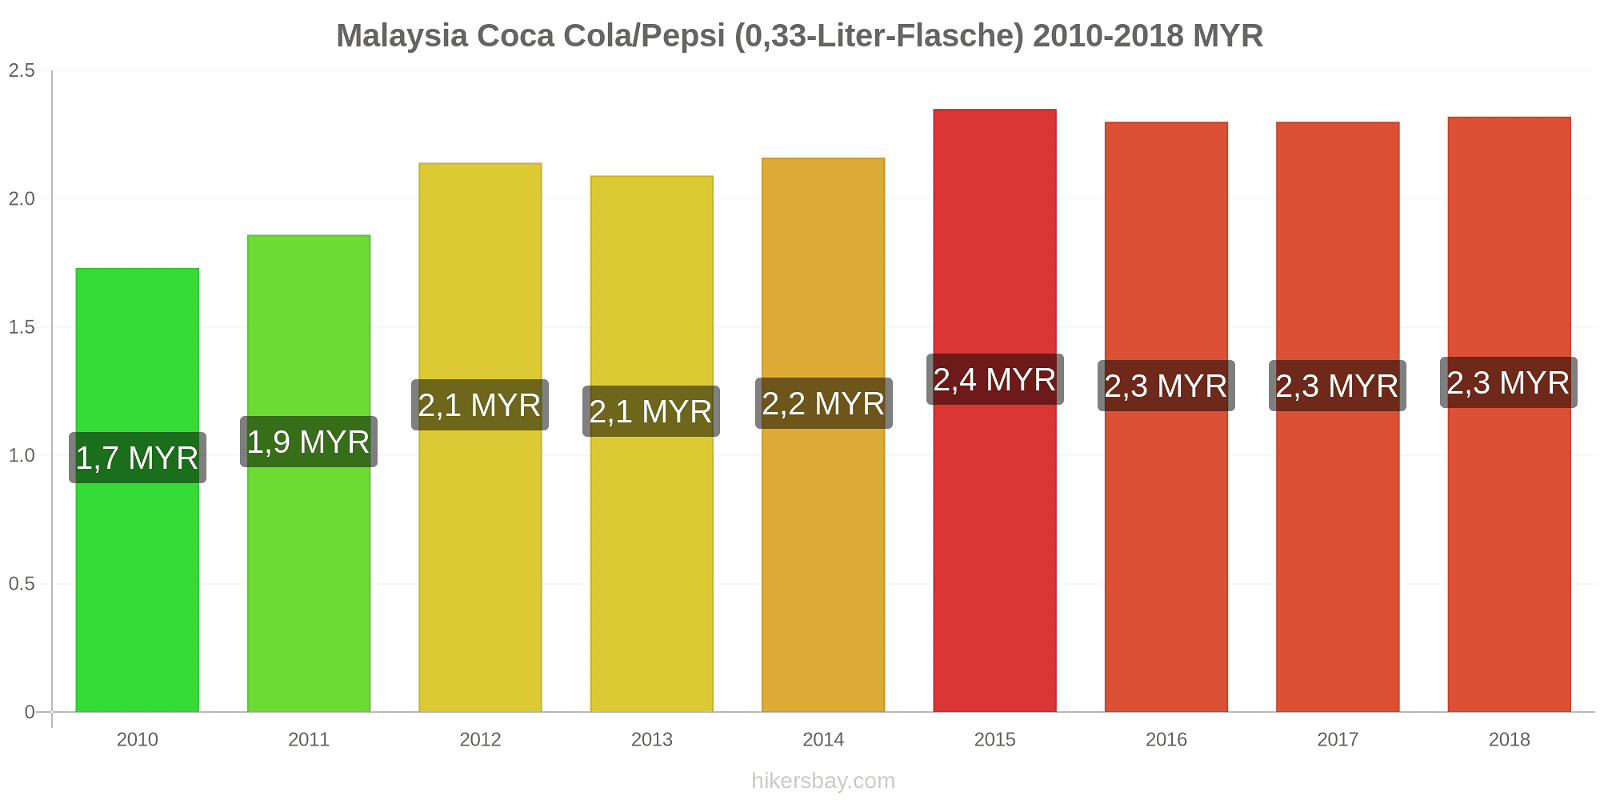 Malaysia Preisänderungen Coke/Pepsi (0,33-Liter-Flasche) hikersbay.com